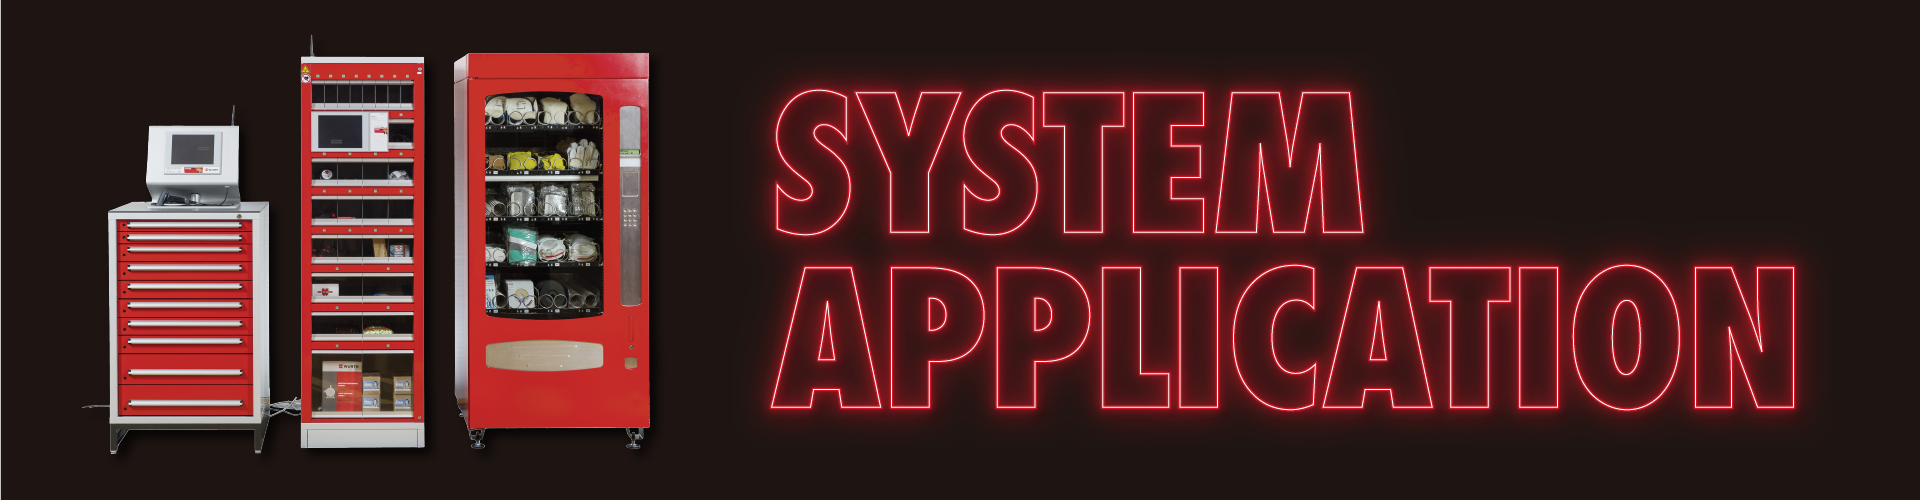 System Application